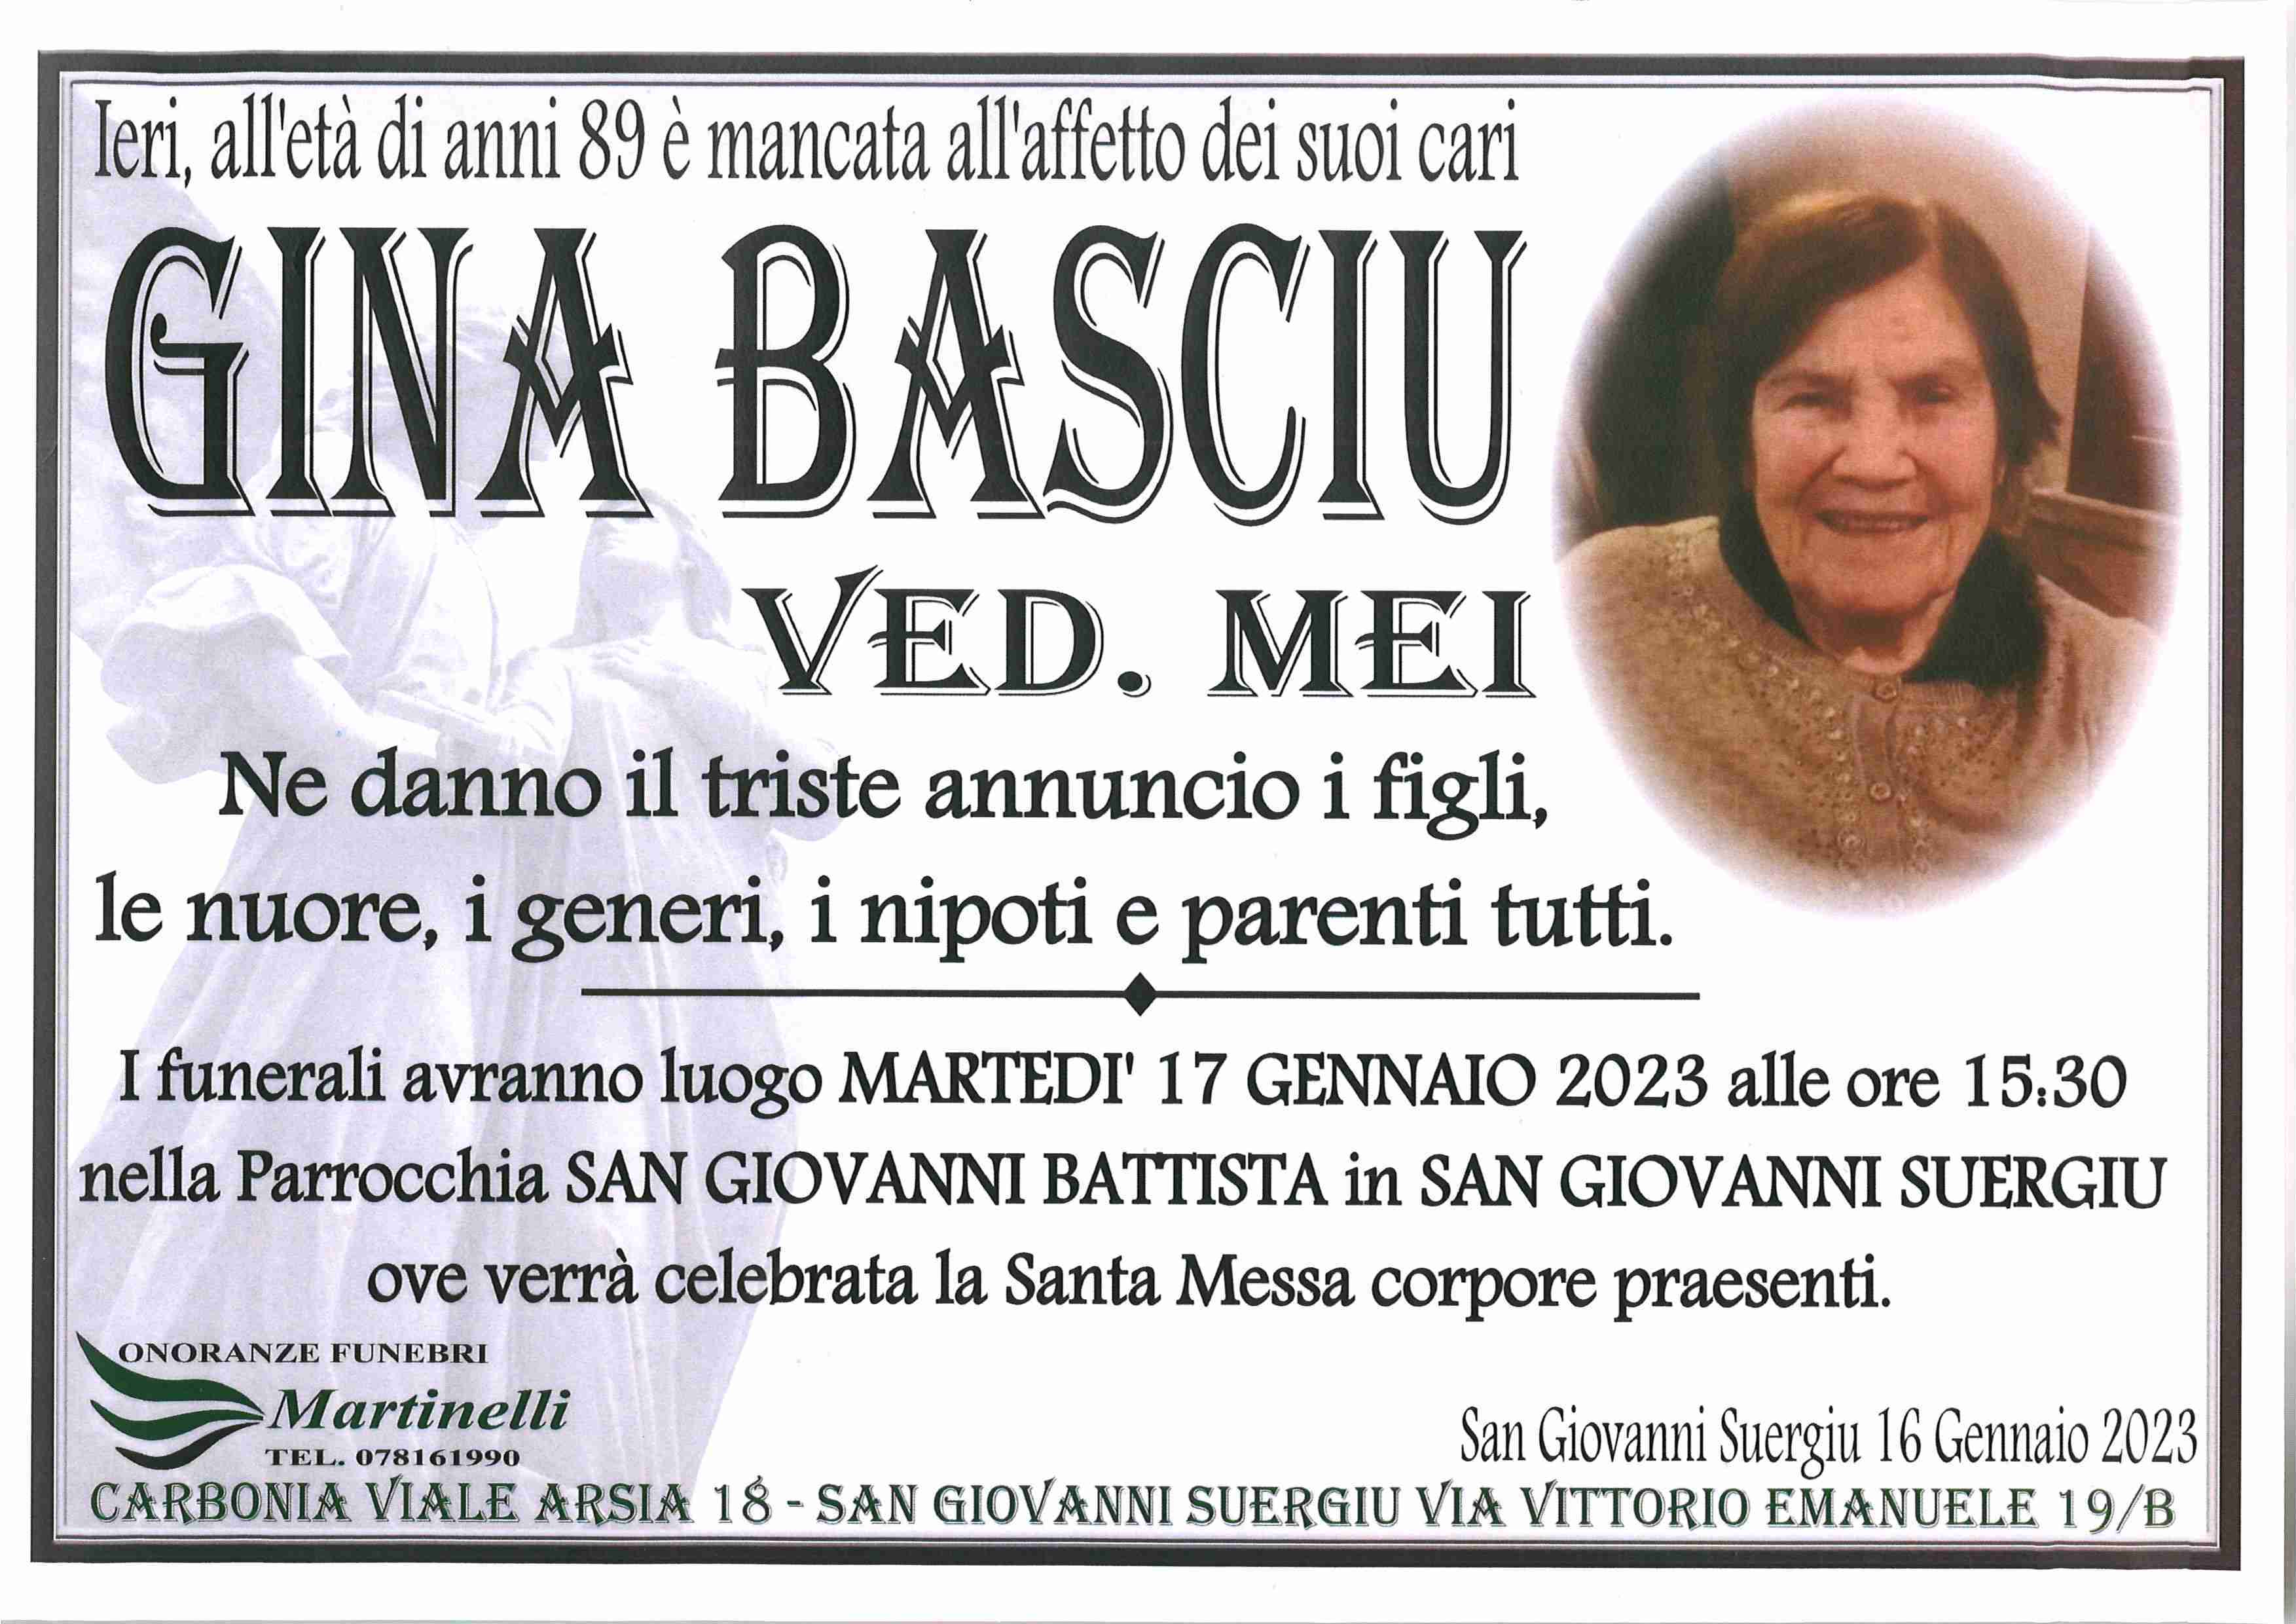 Luigia Basciu